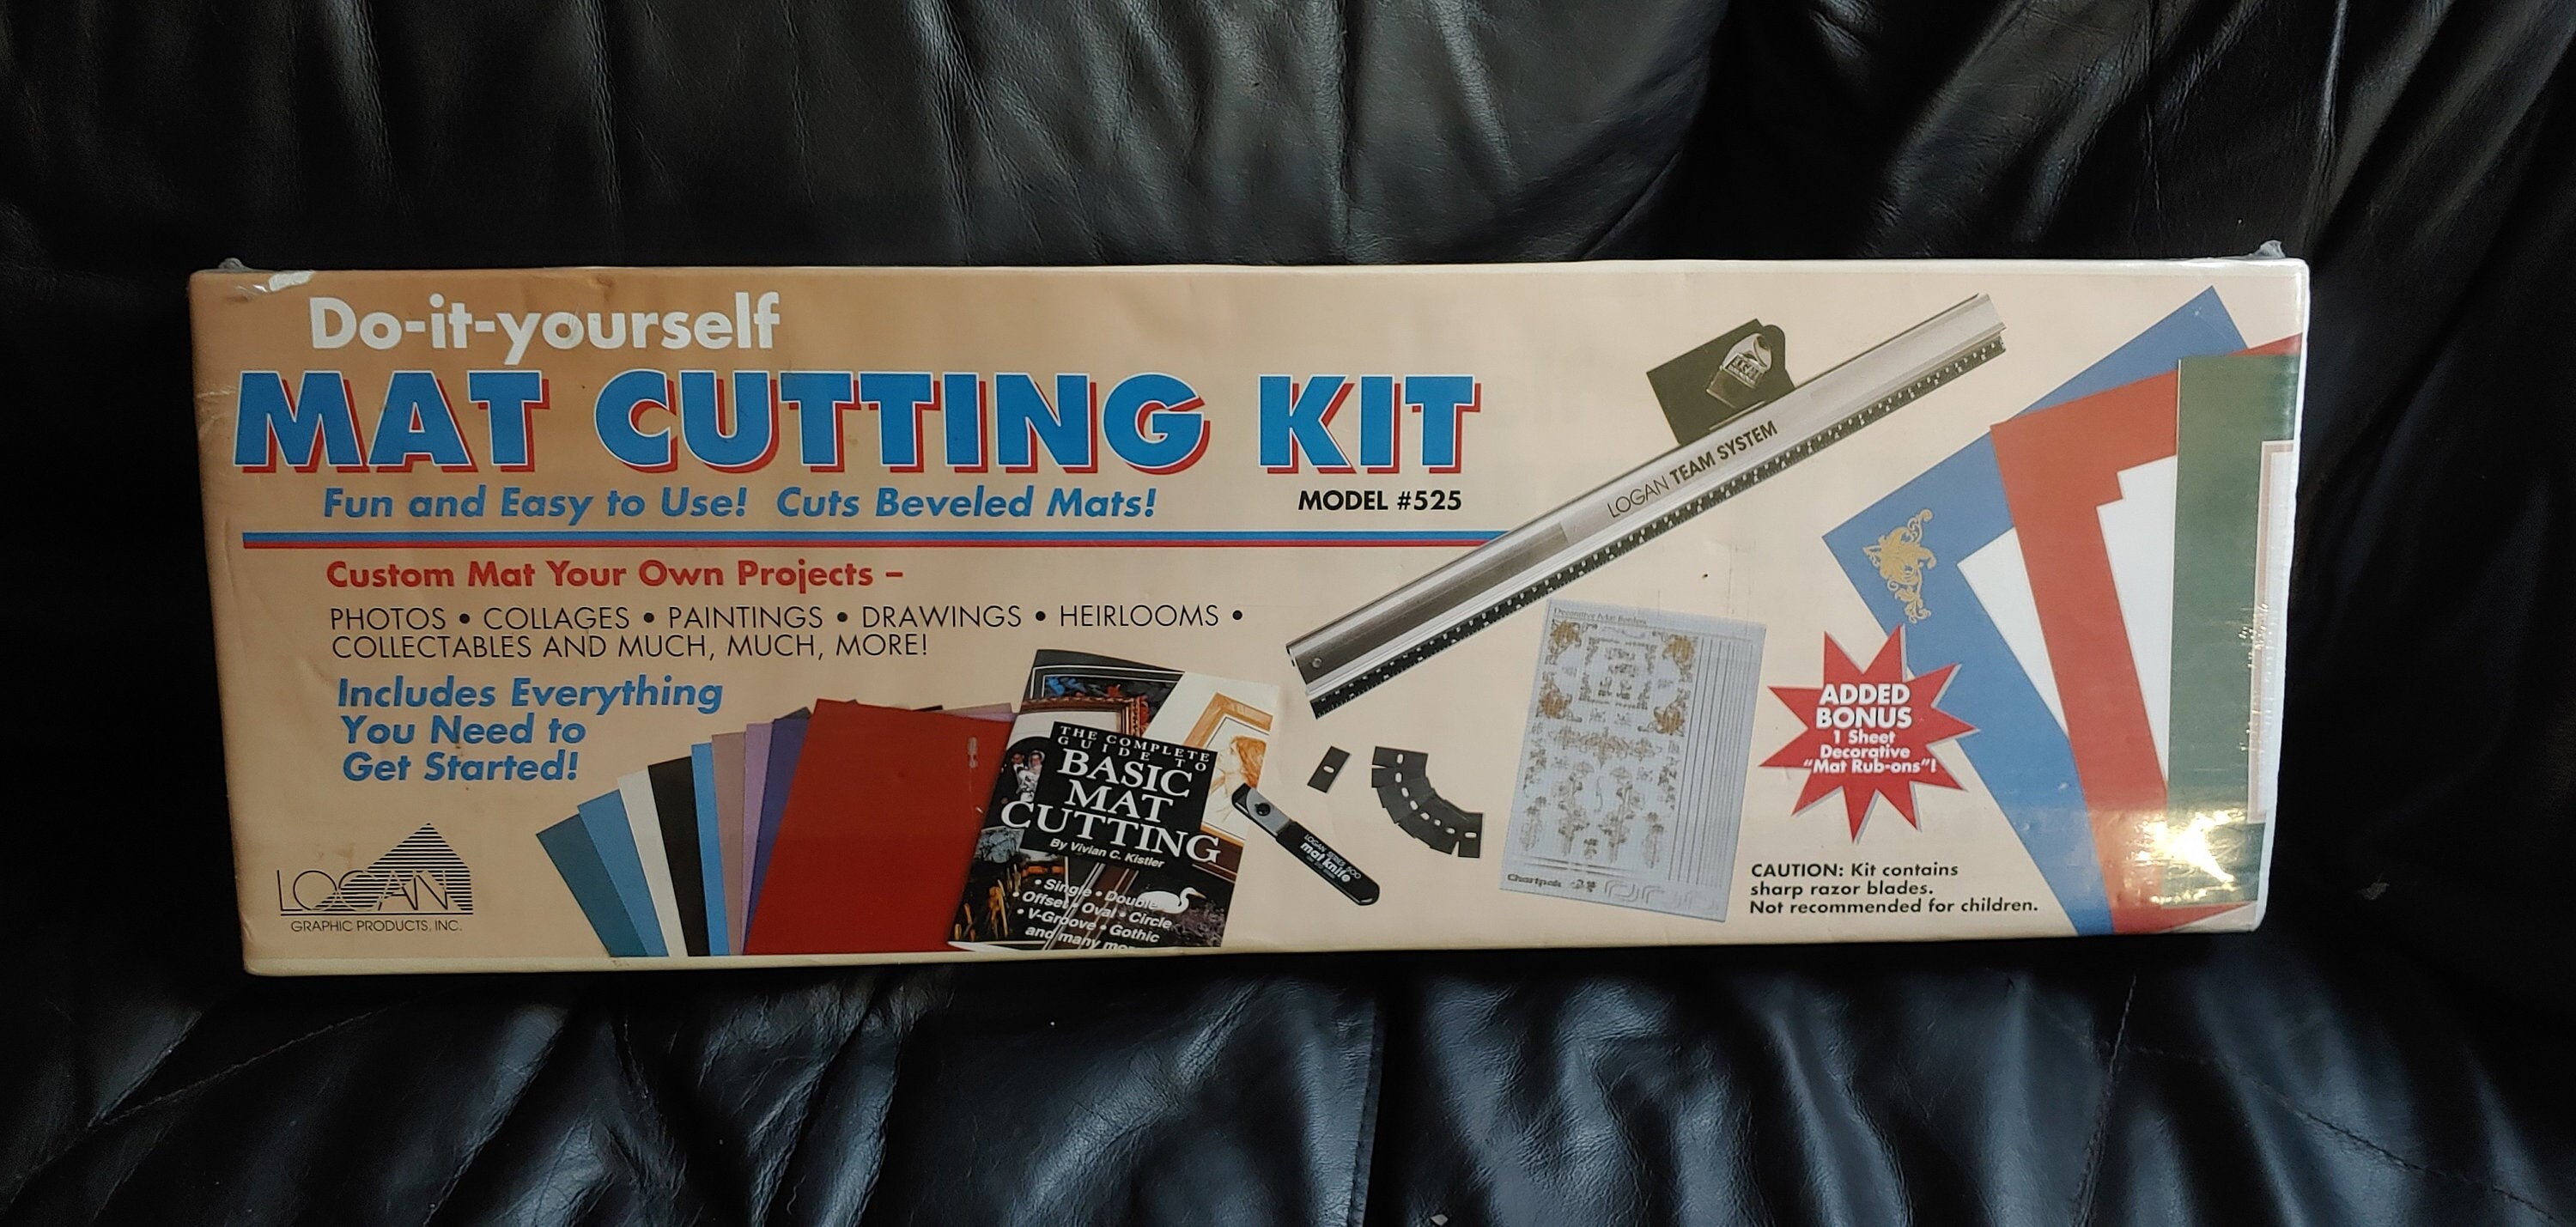 Logan Graphic Products Mat Cutting Kit